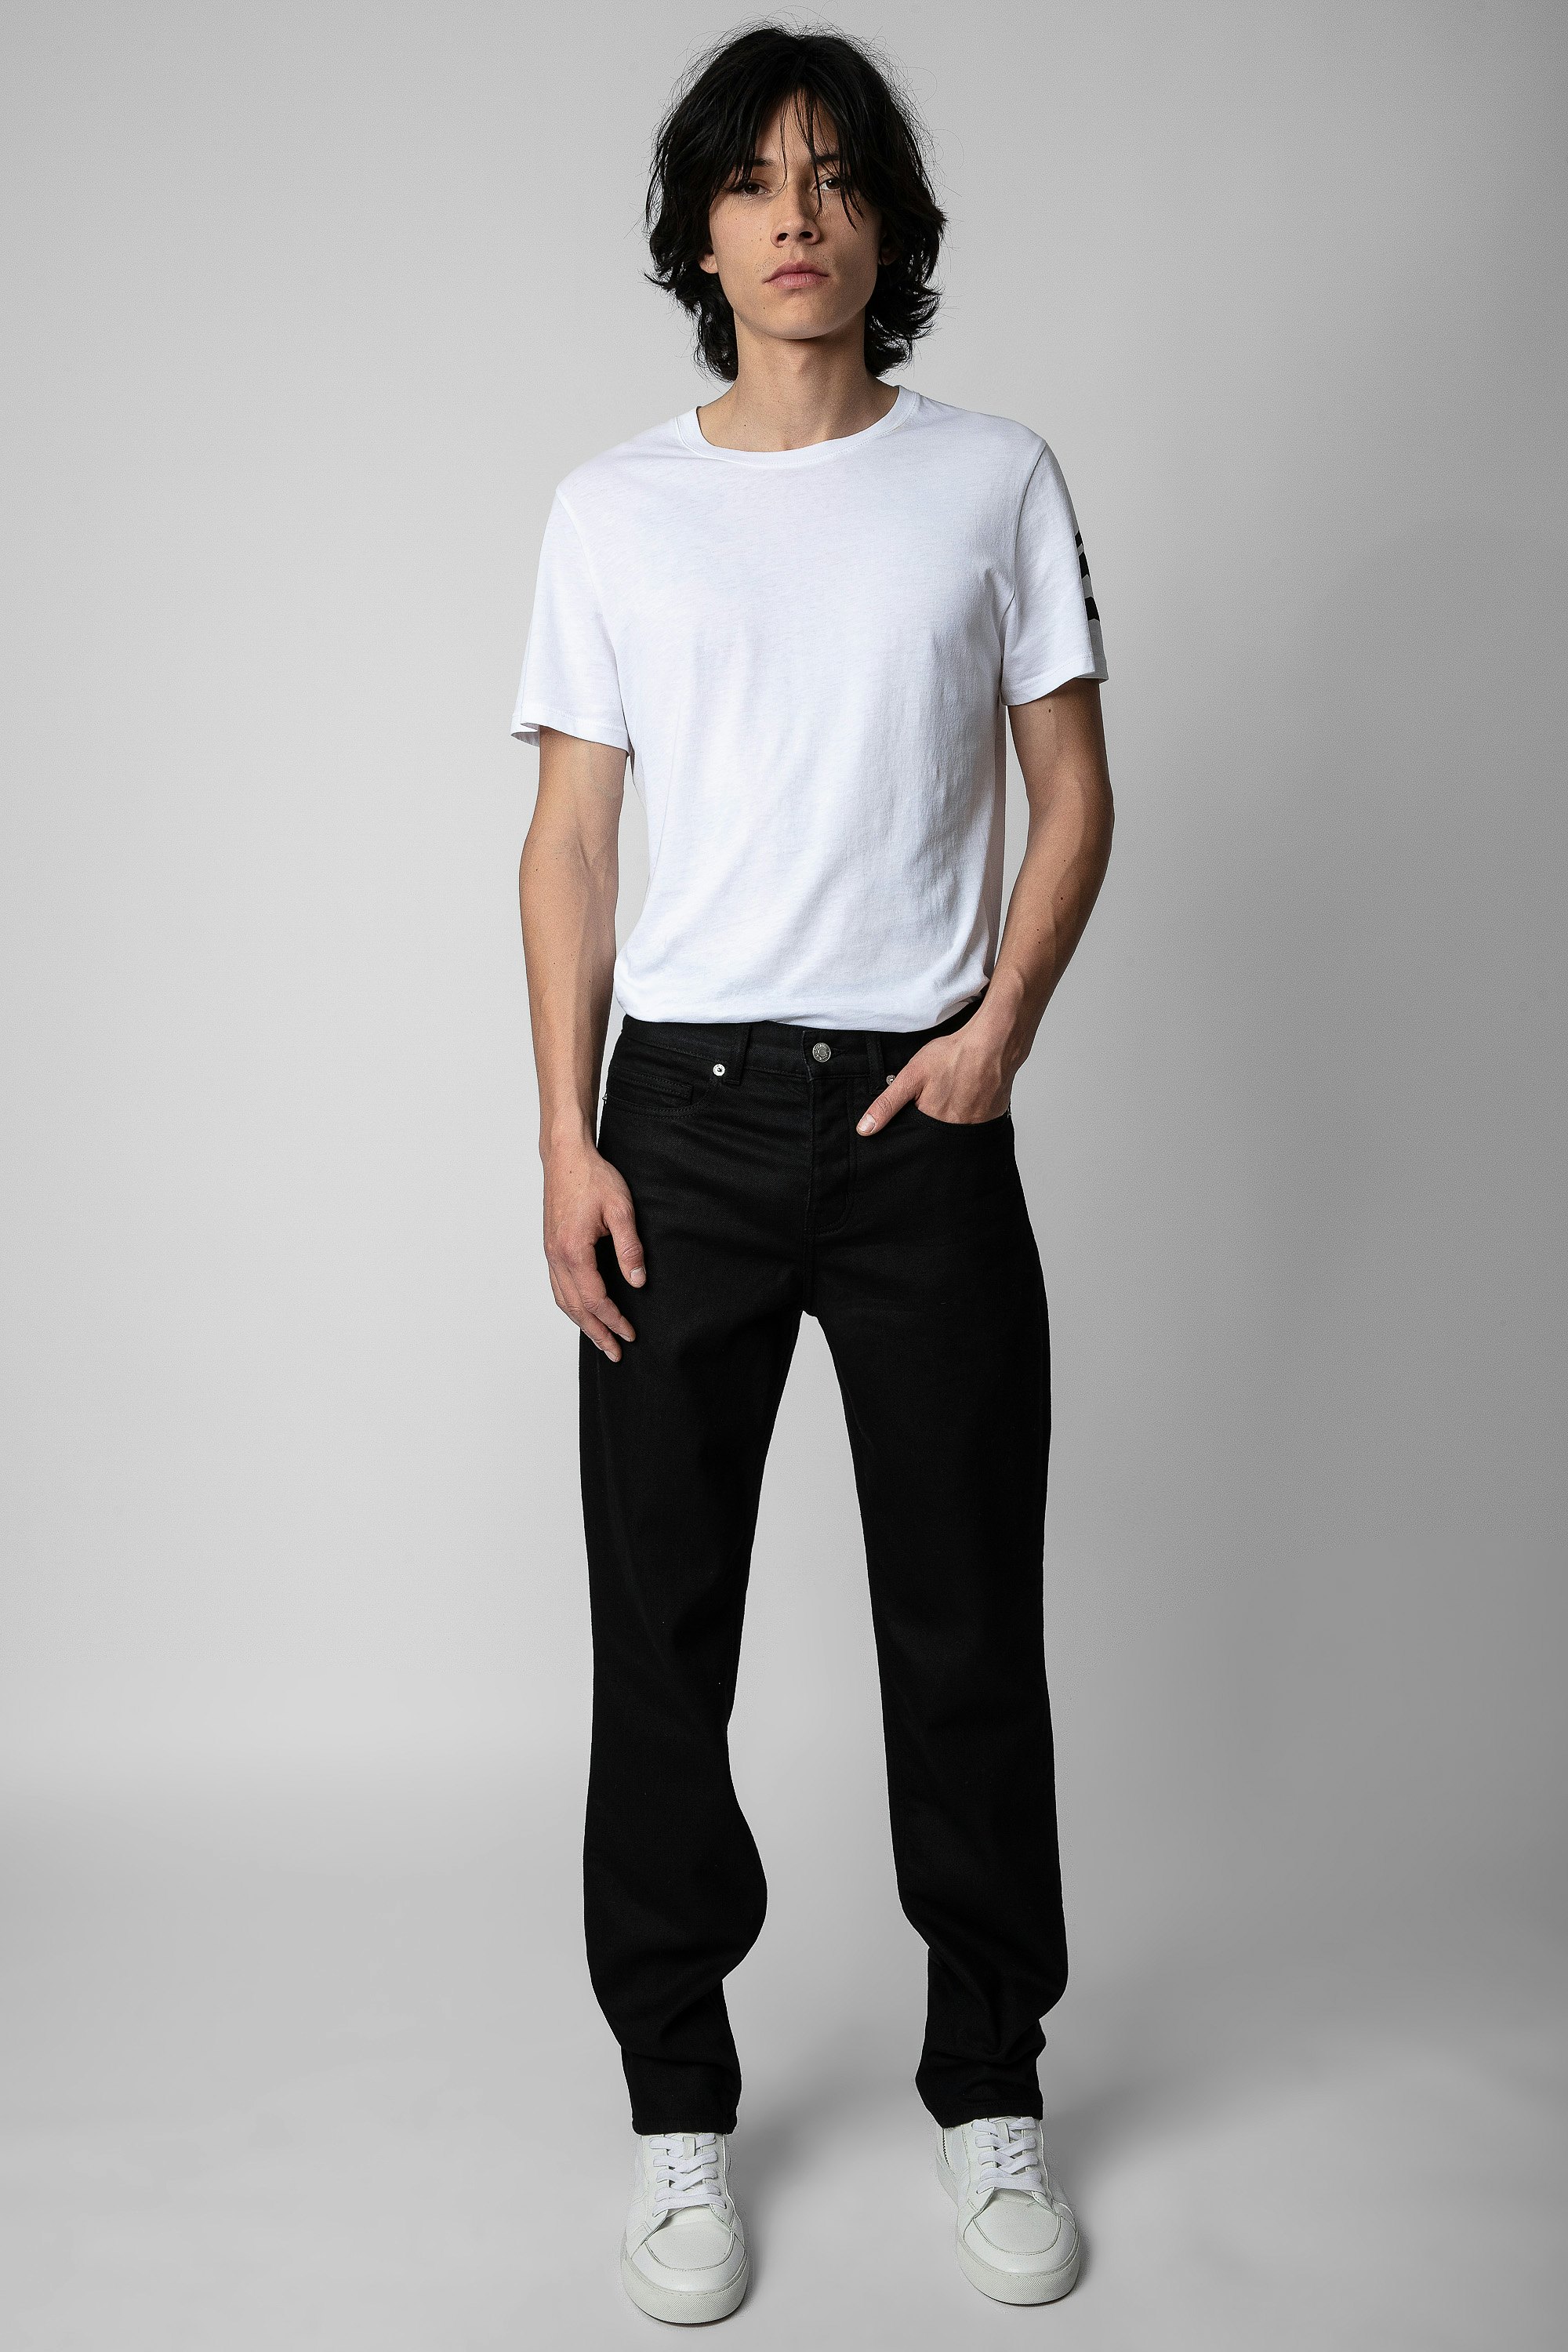 John Jeans - Men’s straight-cut black denim jeans